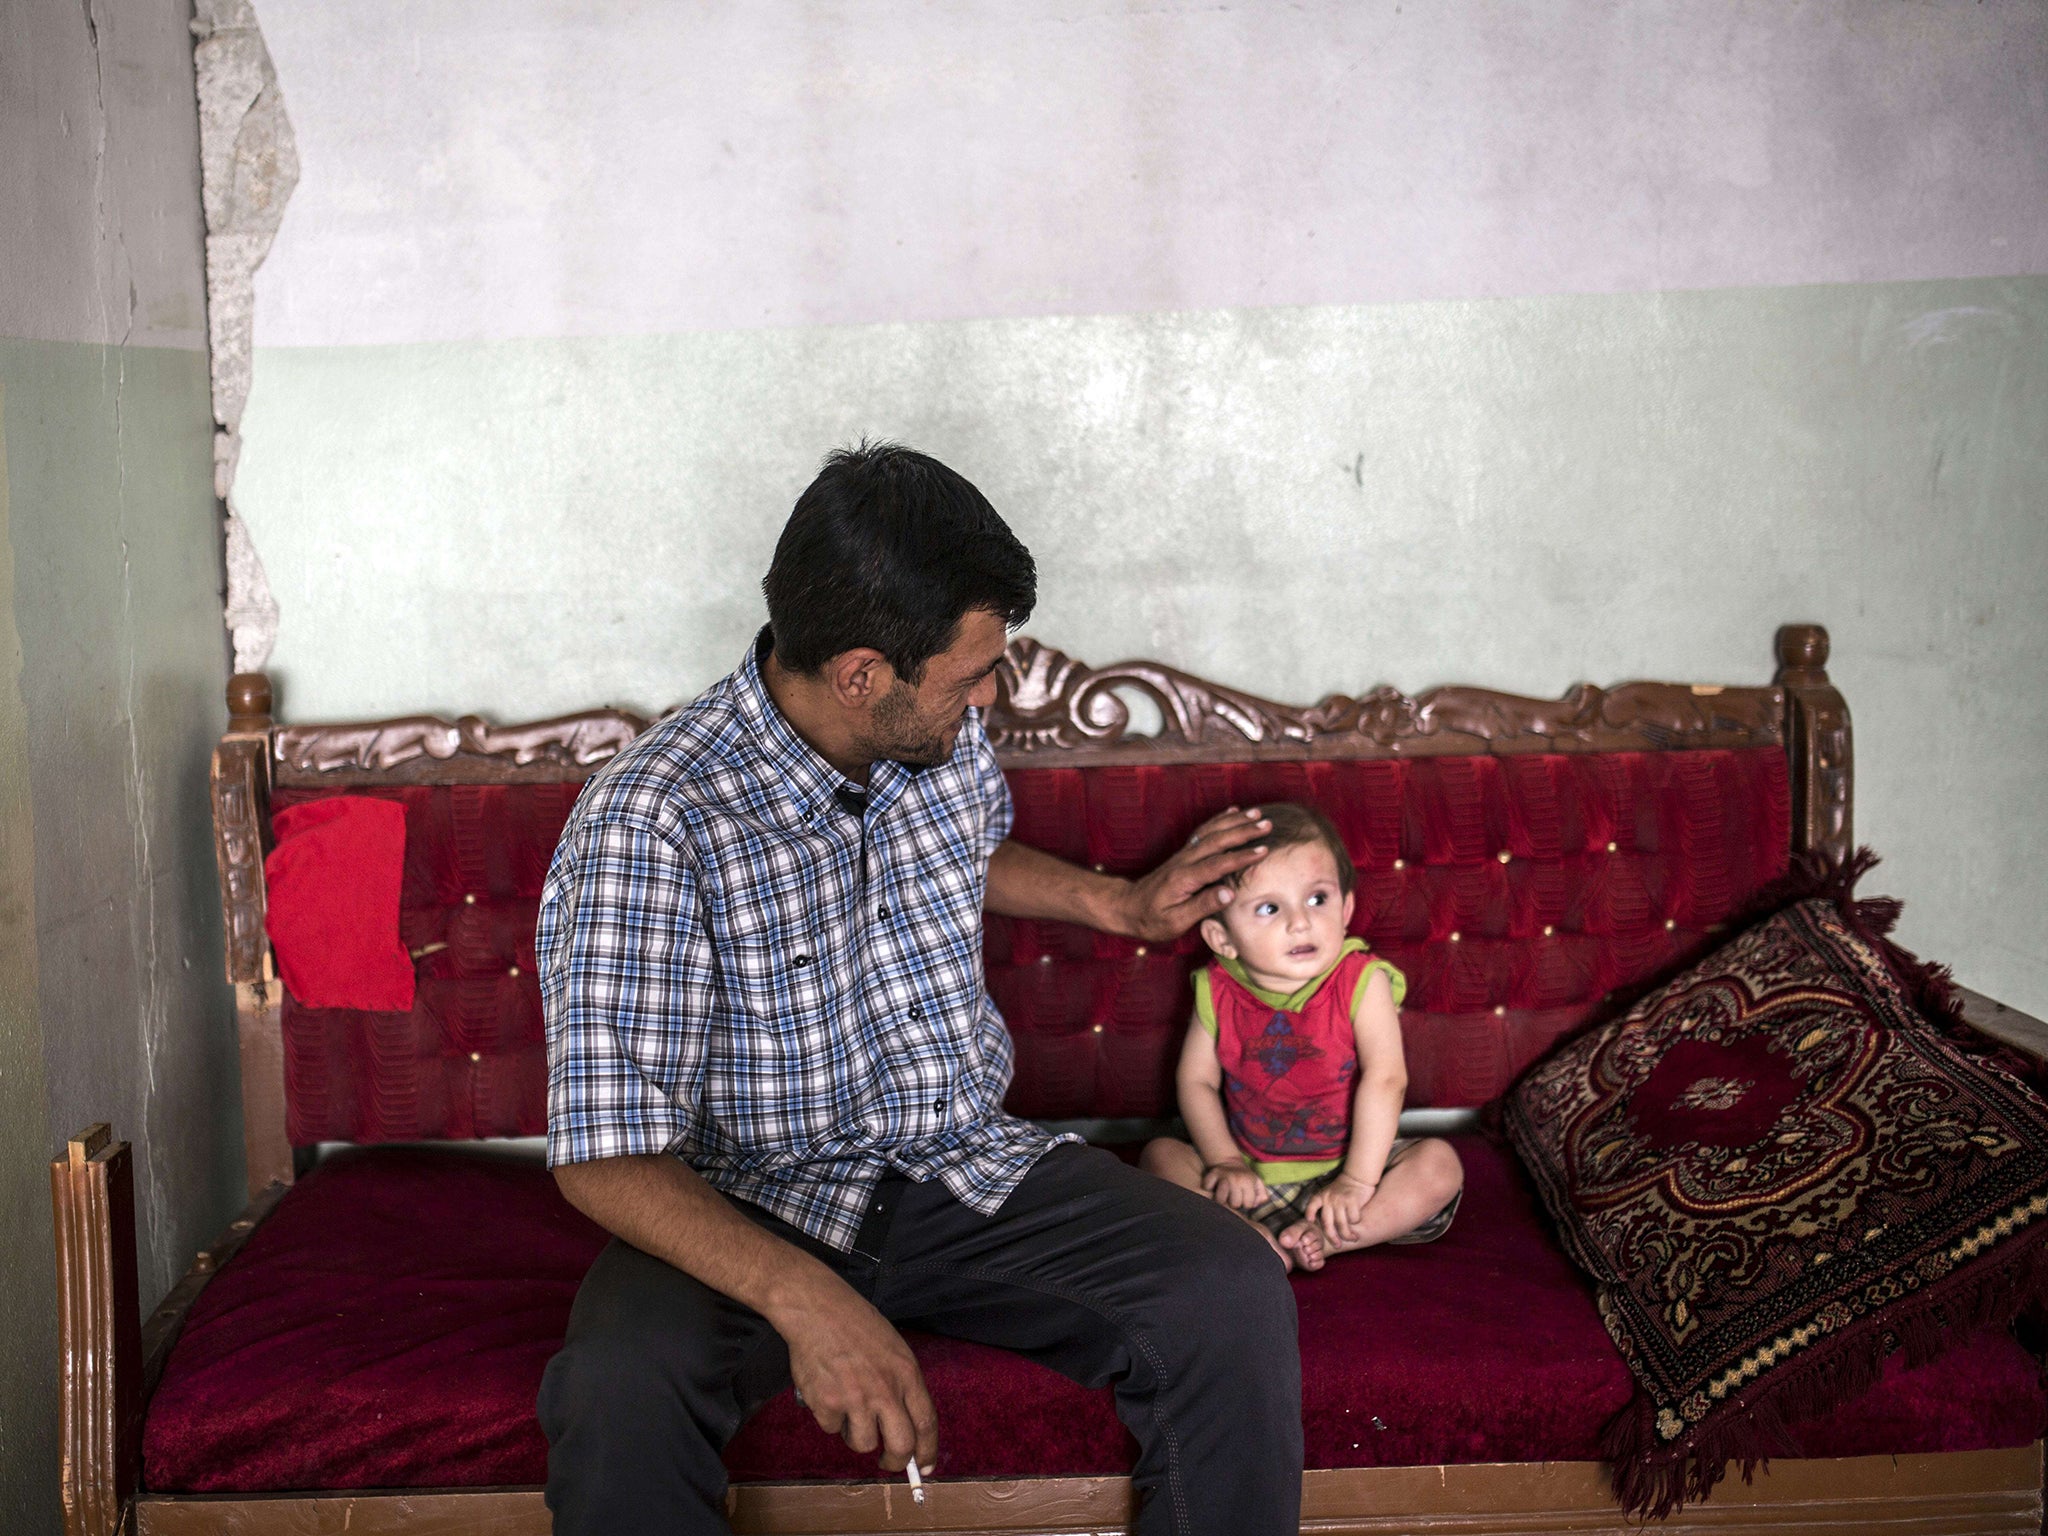 Abdullah Kurdi sits next to his nephew in a relative's house in Kobane